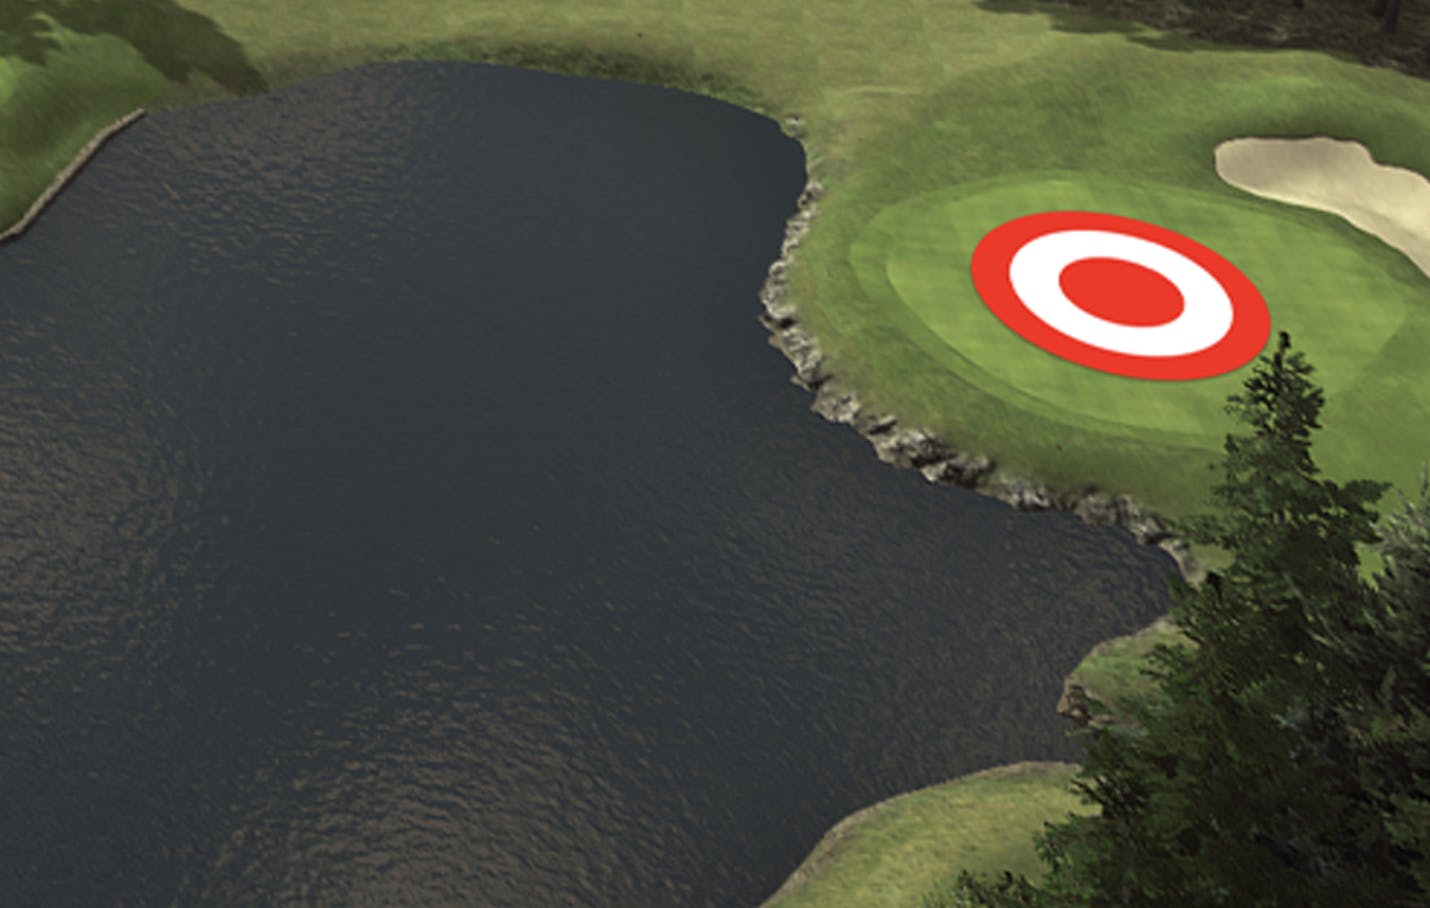 Bullseye_trackman_simulator_golf